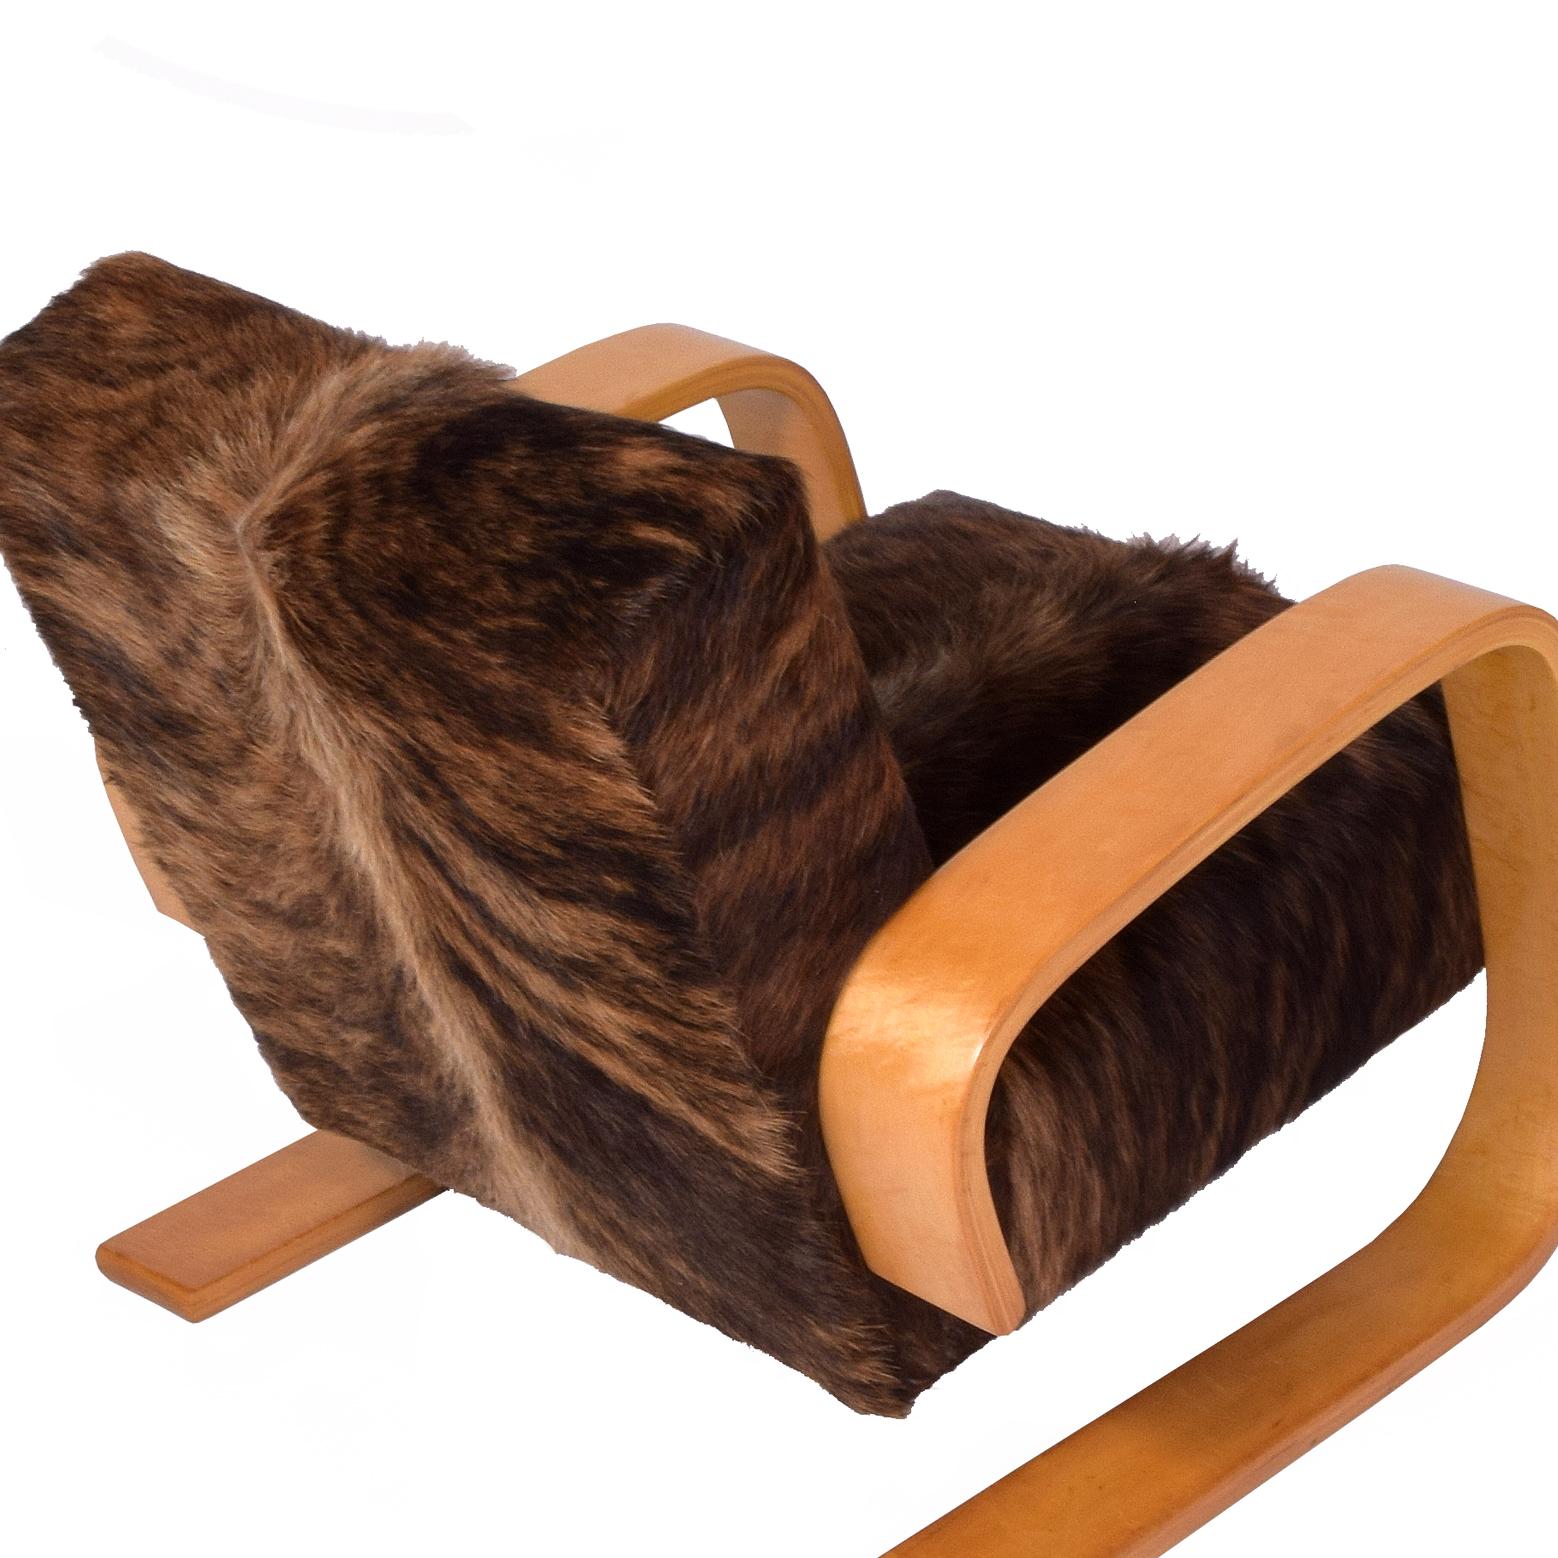 Plywood Early Tank Chair by Alvar Aalto for Artek, 1940-1955